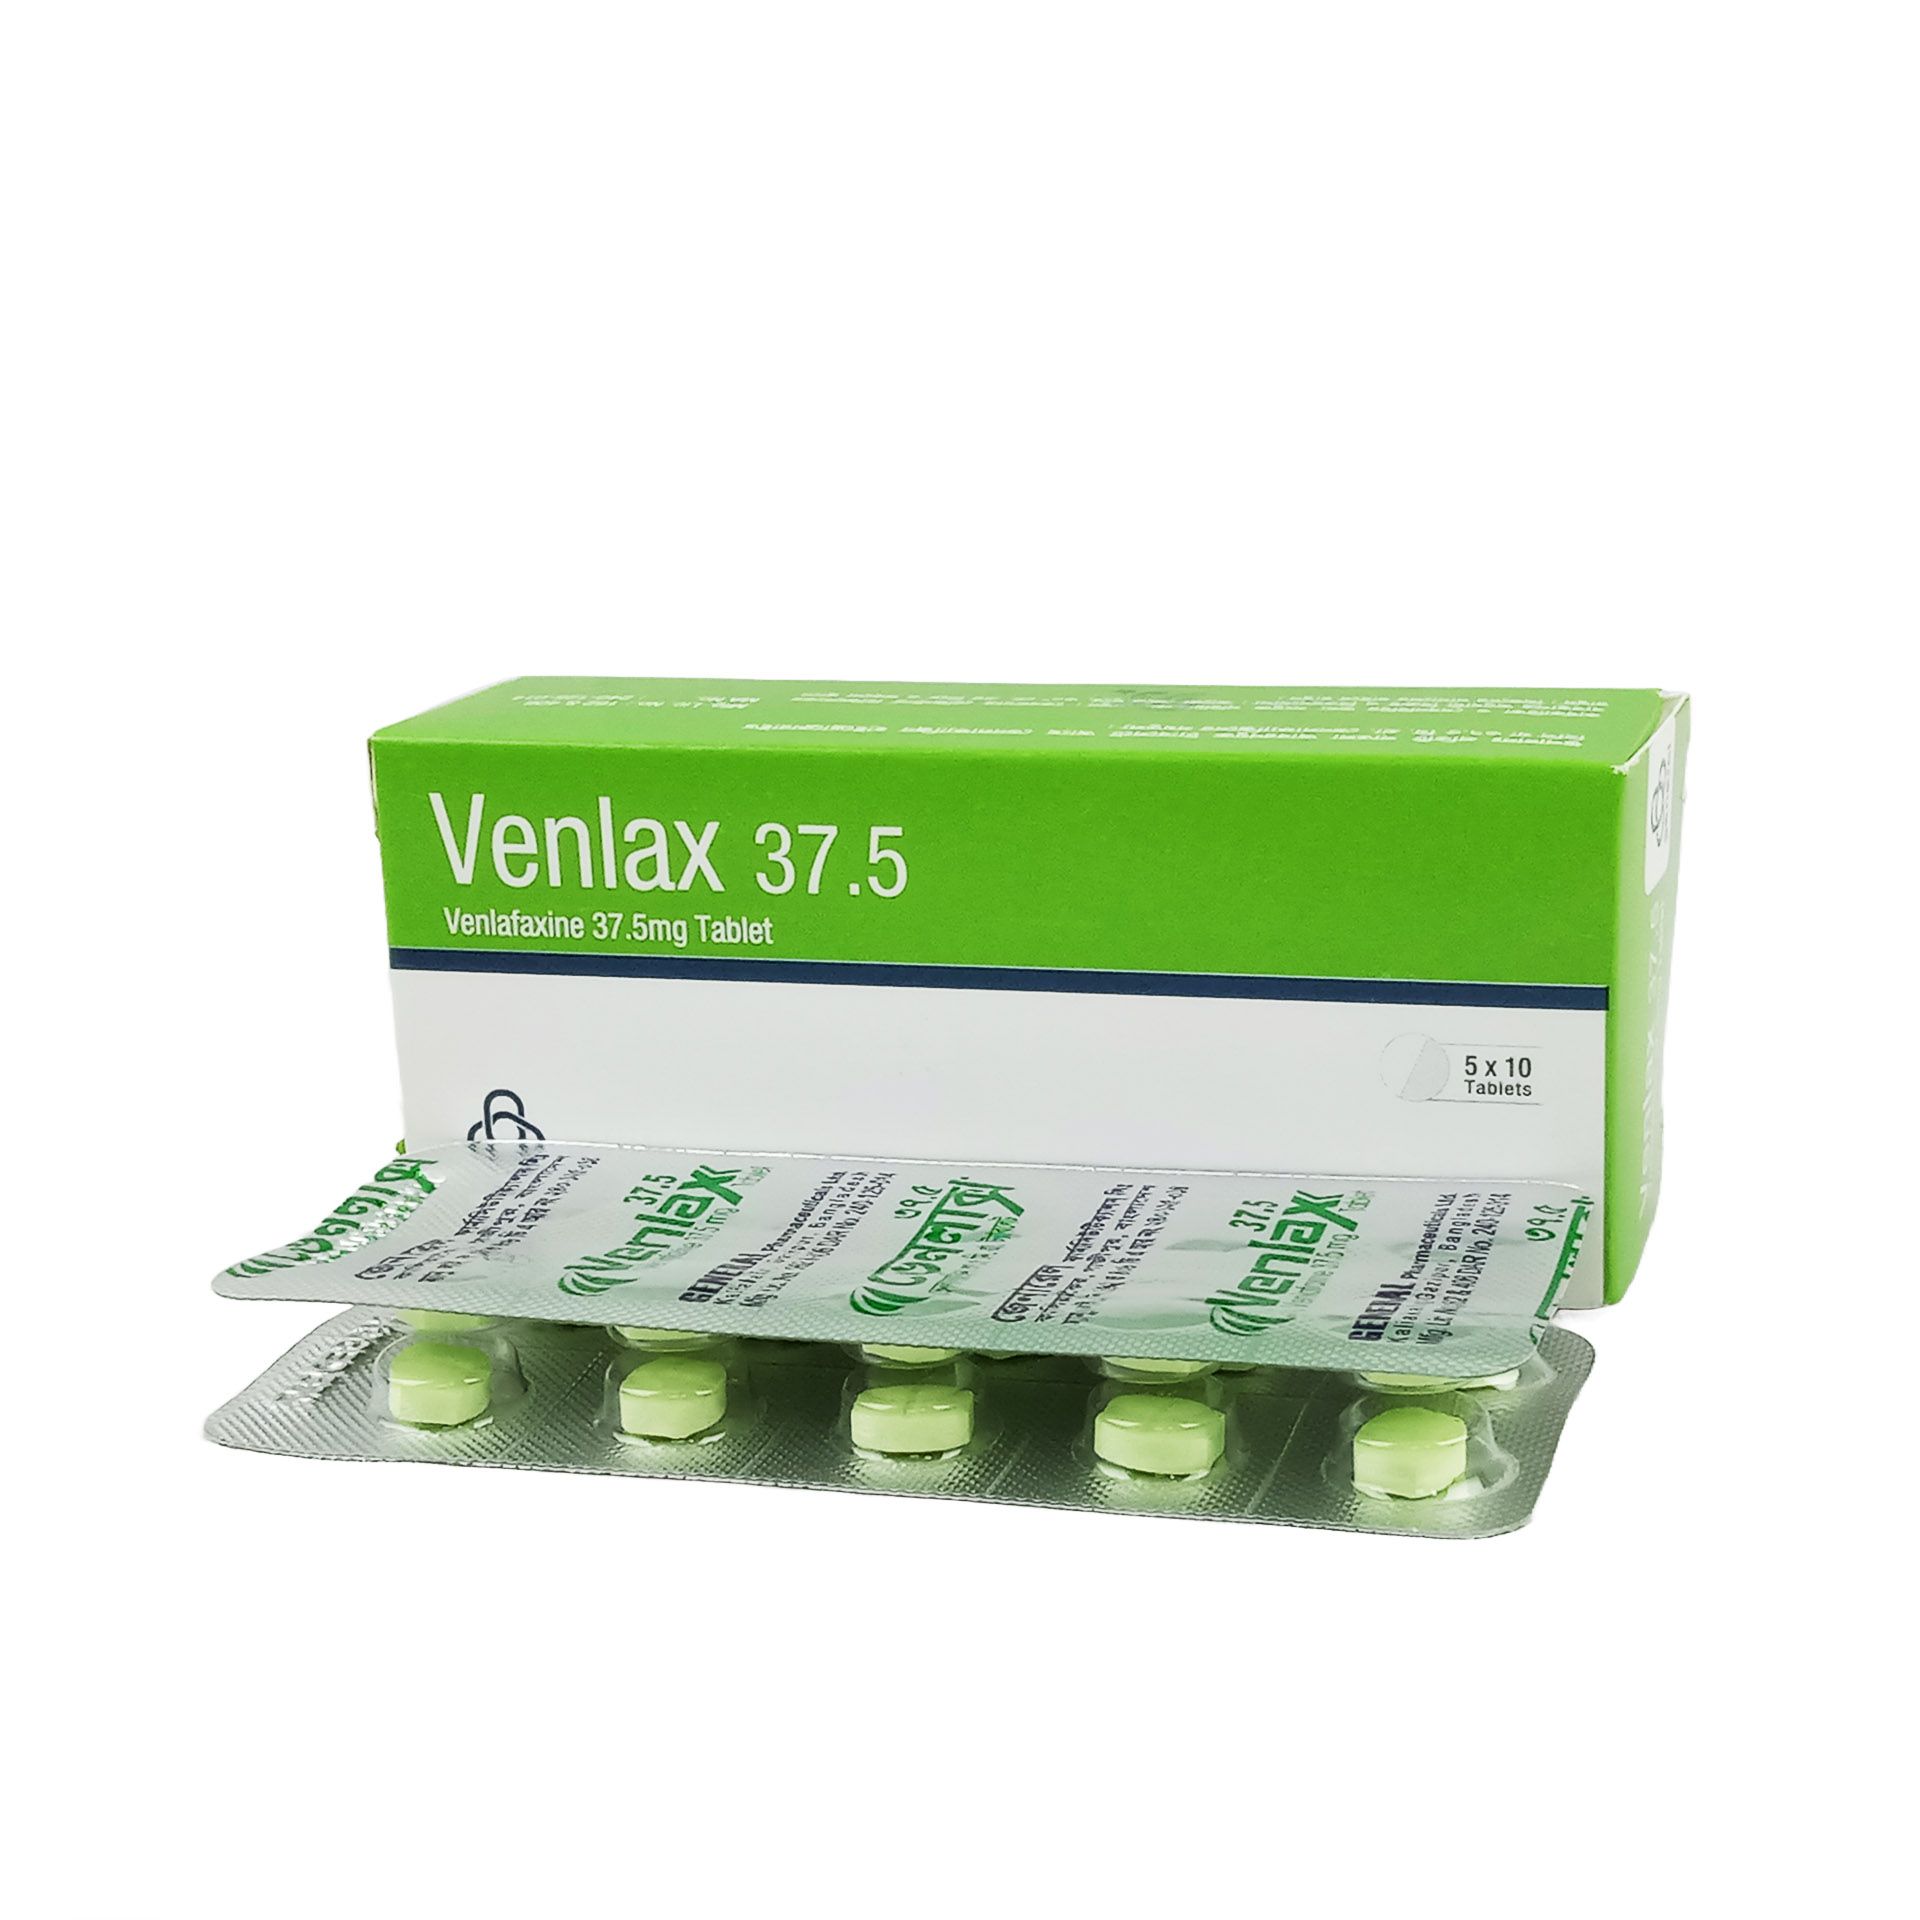 Venlax 37.5 37.5mg Tablet